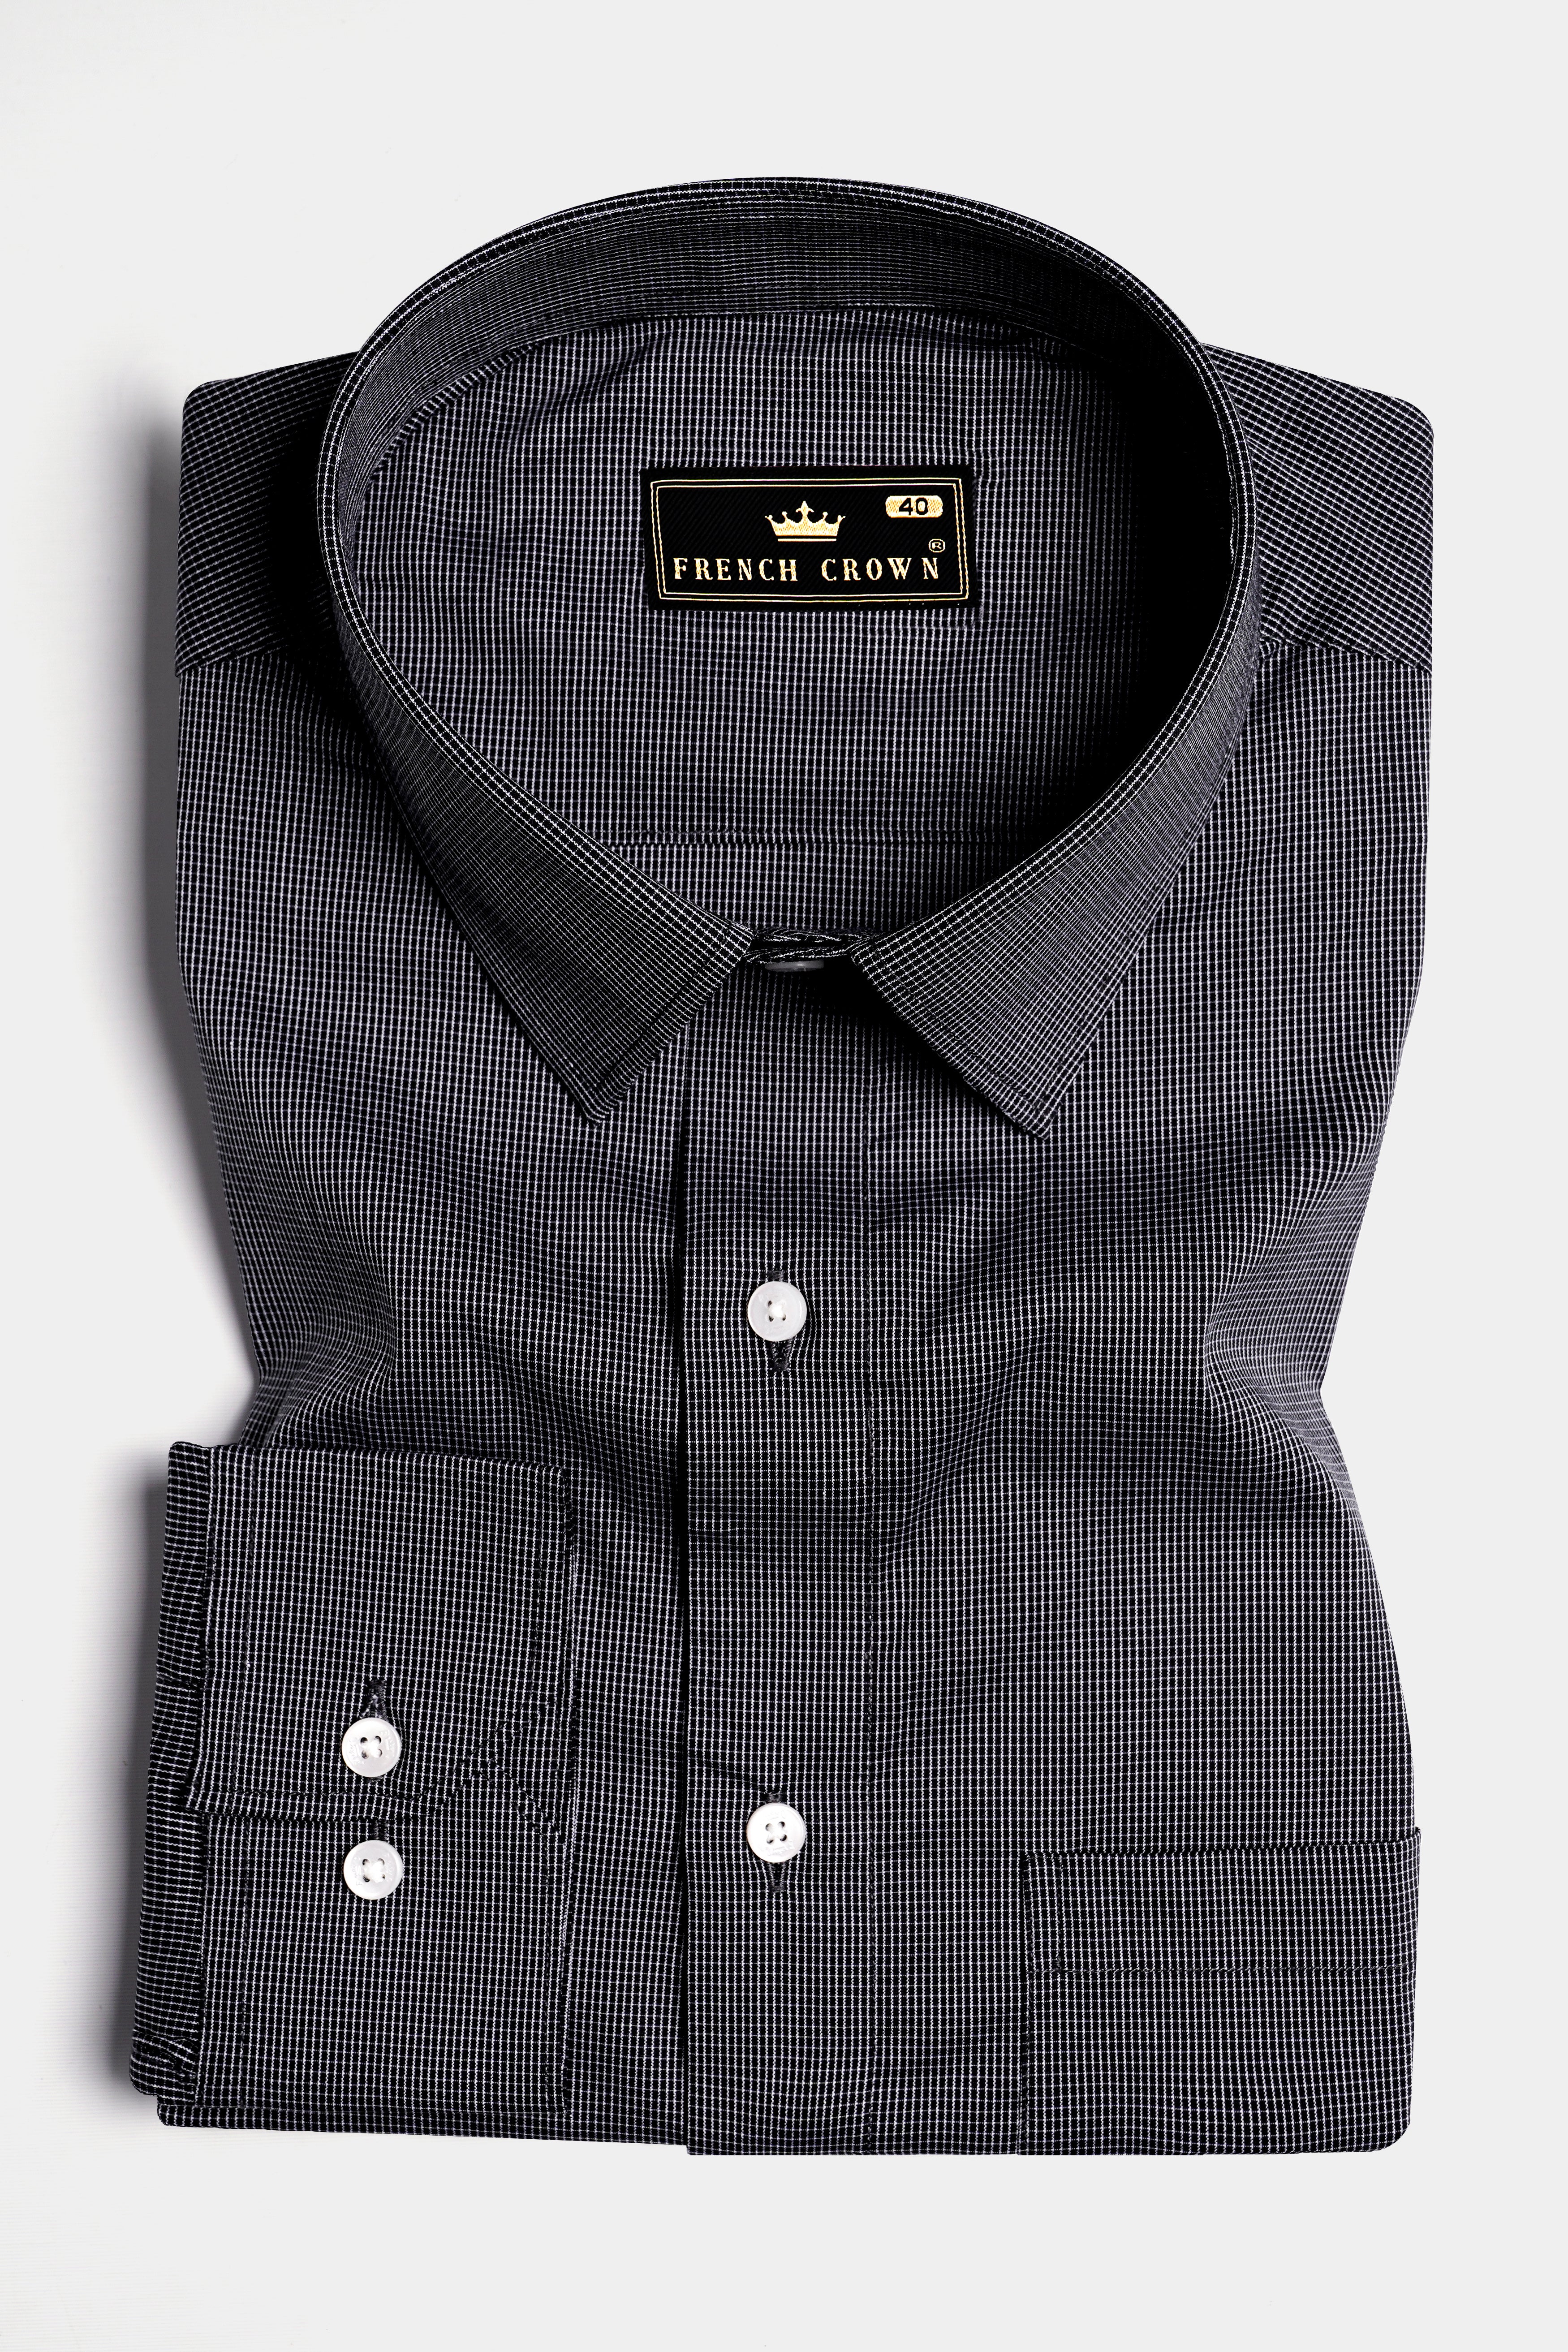 Jade Black and White Checkered Premium Giza Cotton Shirt